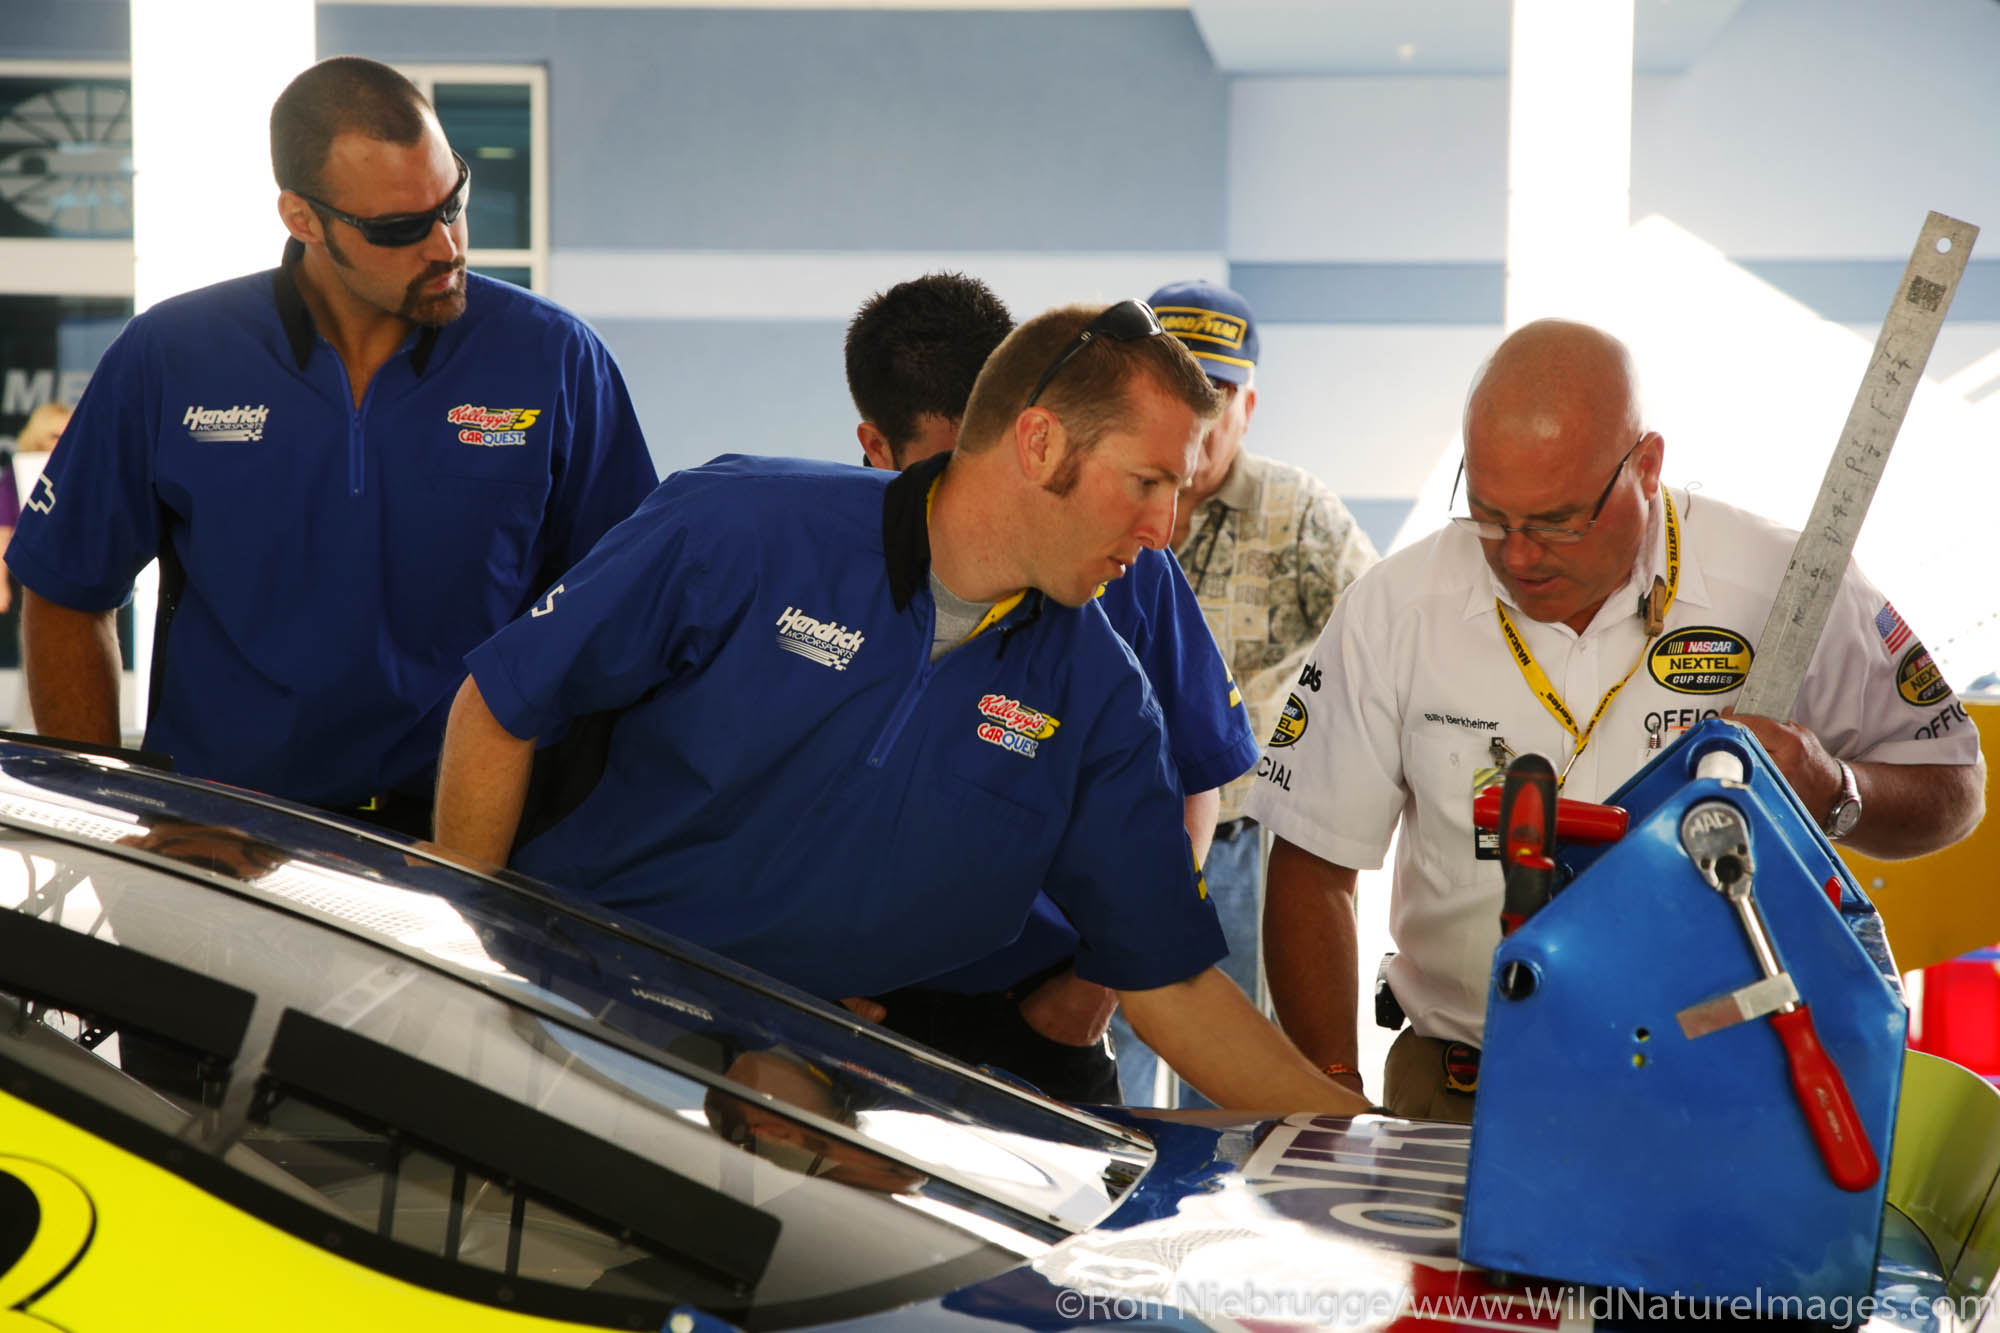 NASCAR inspectors inspect the # 5 car of Kyle Busch at the Las Vegas Motor Speedway, Las Vegas, Nevada.